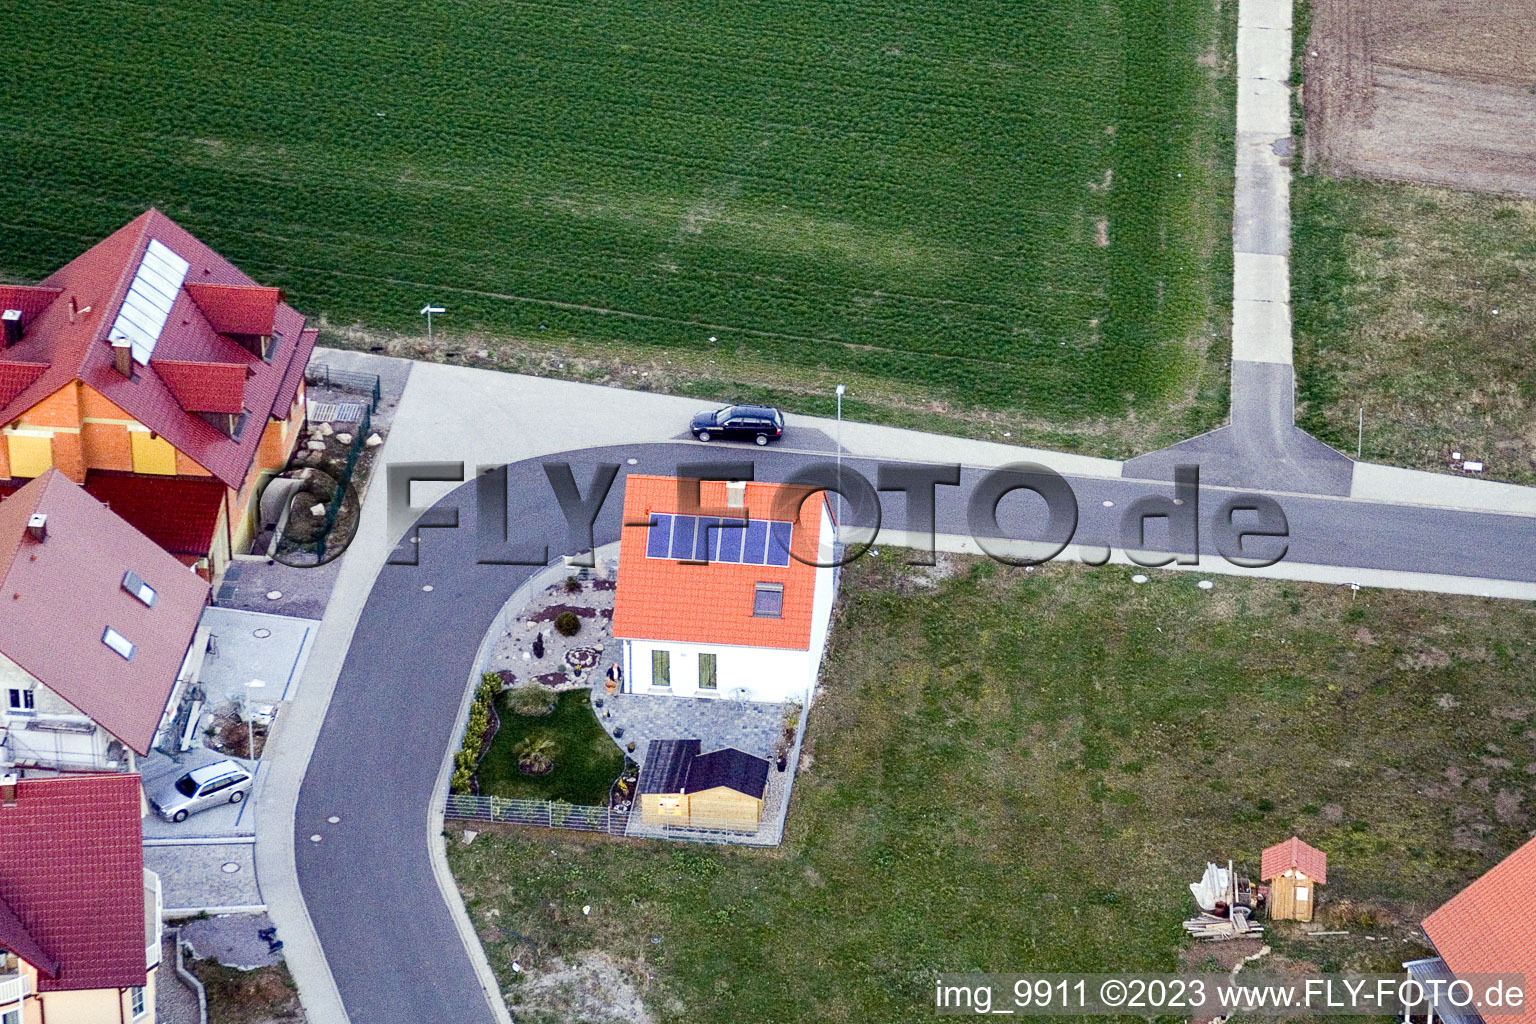 Drone image of New development area NE in the district Schaidt in Wörth am Rhein in the state Rhineland-Palatinate, Germany